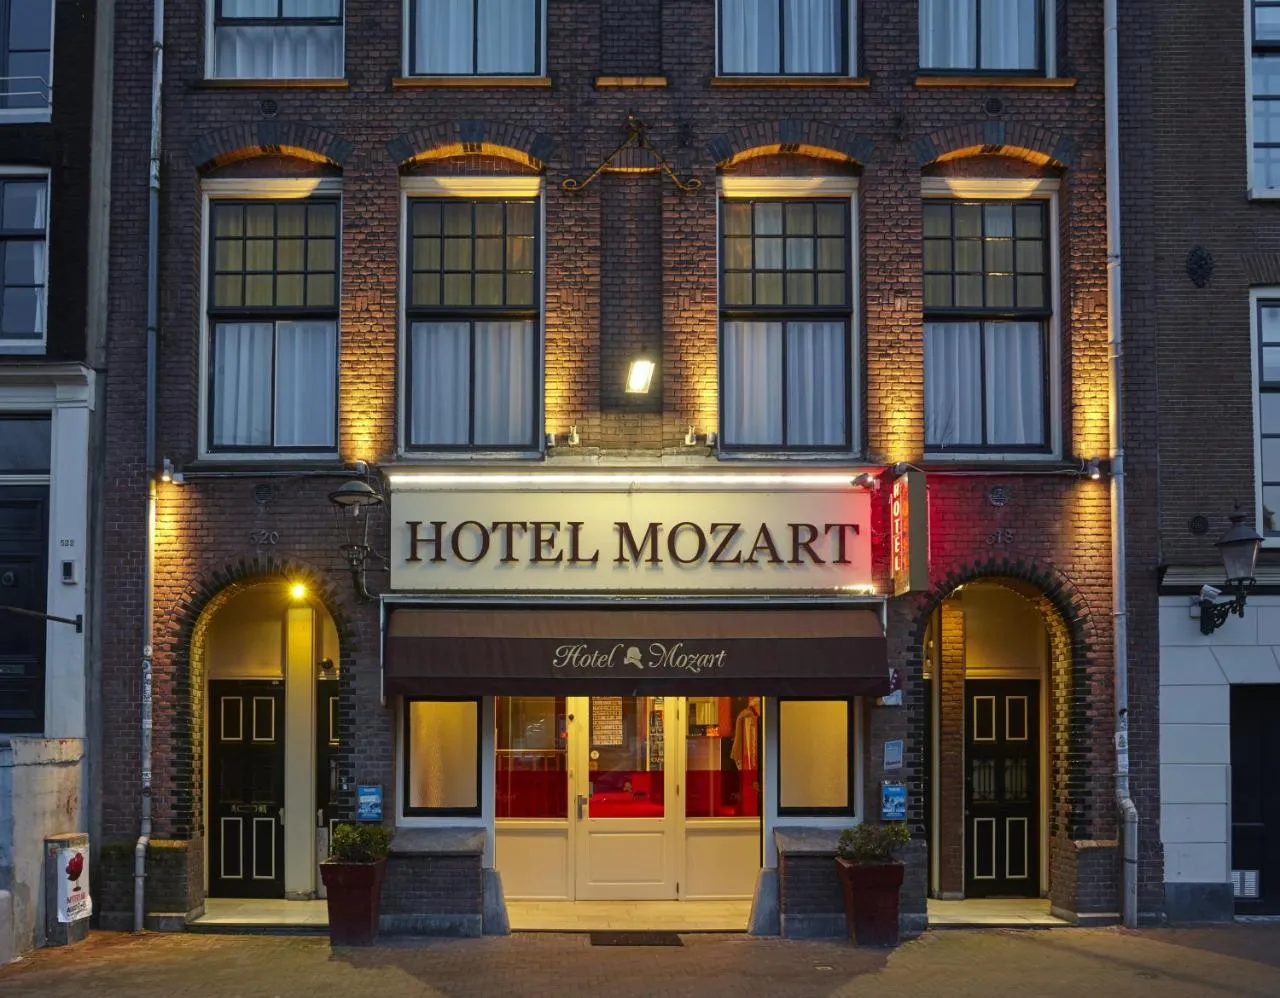 Building hotel Hotel Mozart